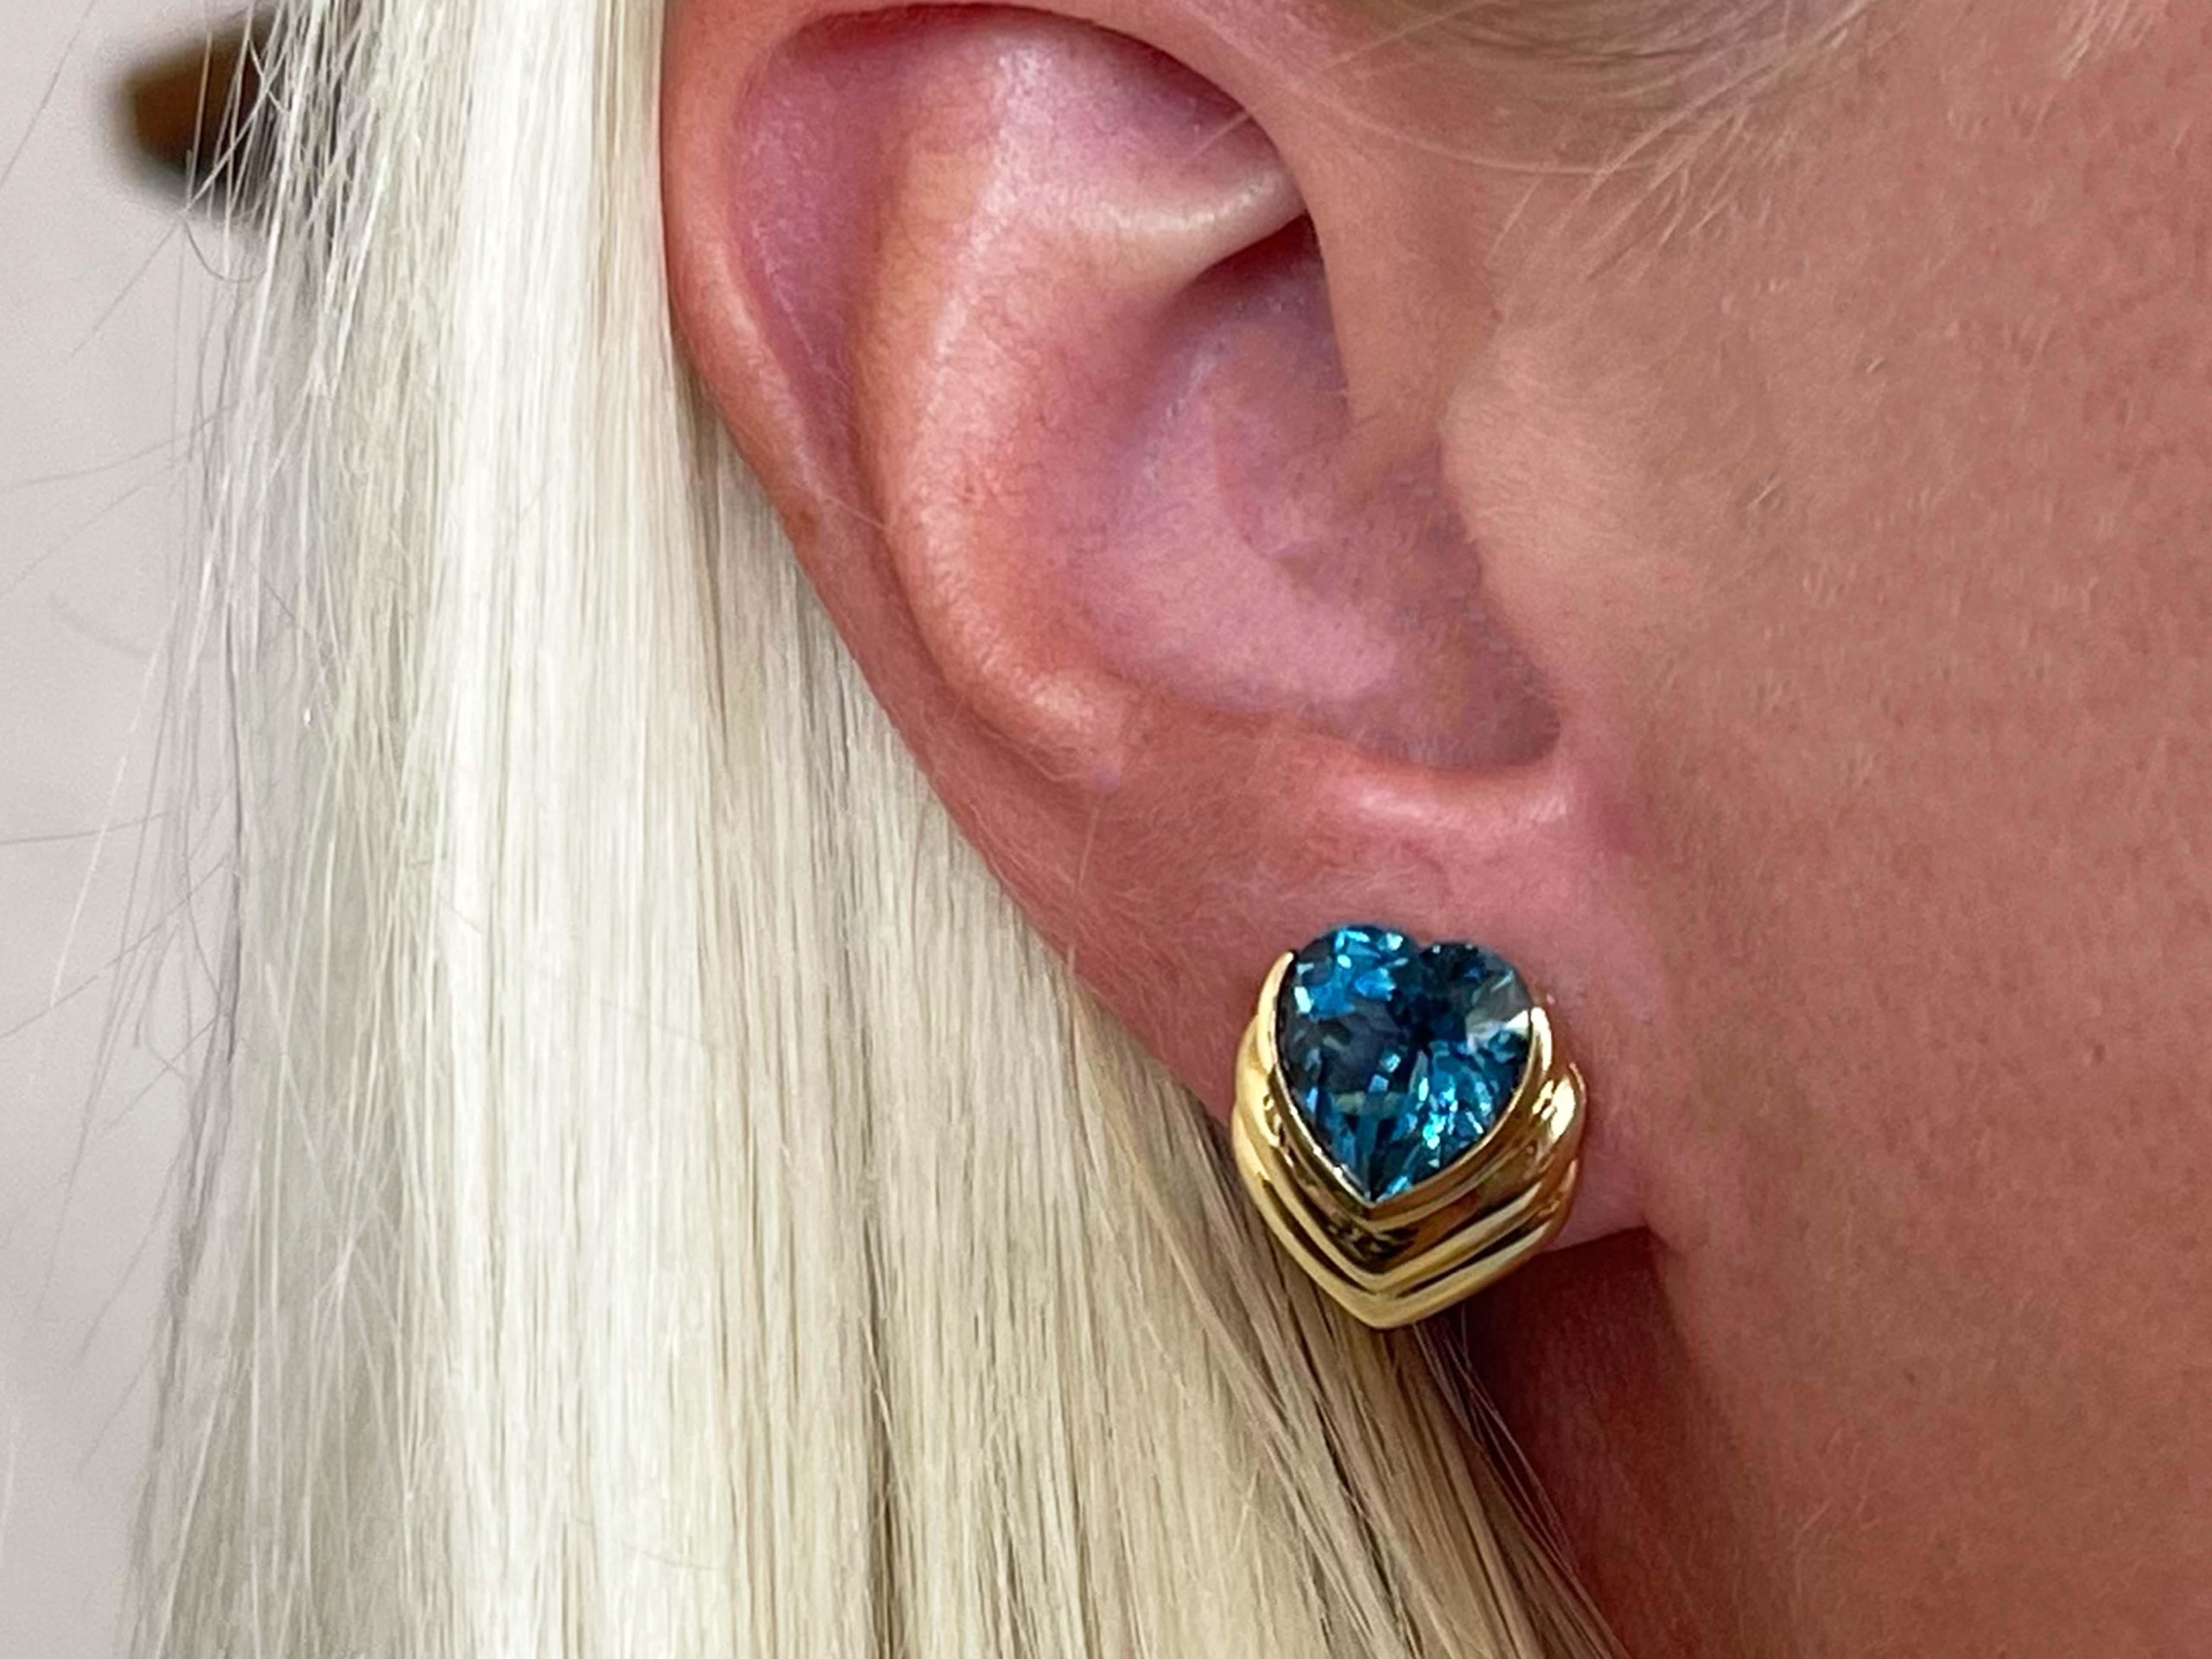 Earrings Specifications:

Metal: 18K Yellow Gold

Total Weight: 10.3 Grams

Gemstone: Blue Topaz

Topaz Measurements: 10.88 x 10.6 x 6.7 mm 

Earring Measurements: 16 mm x 14 mm

Stamped: 